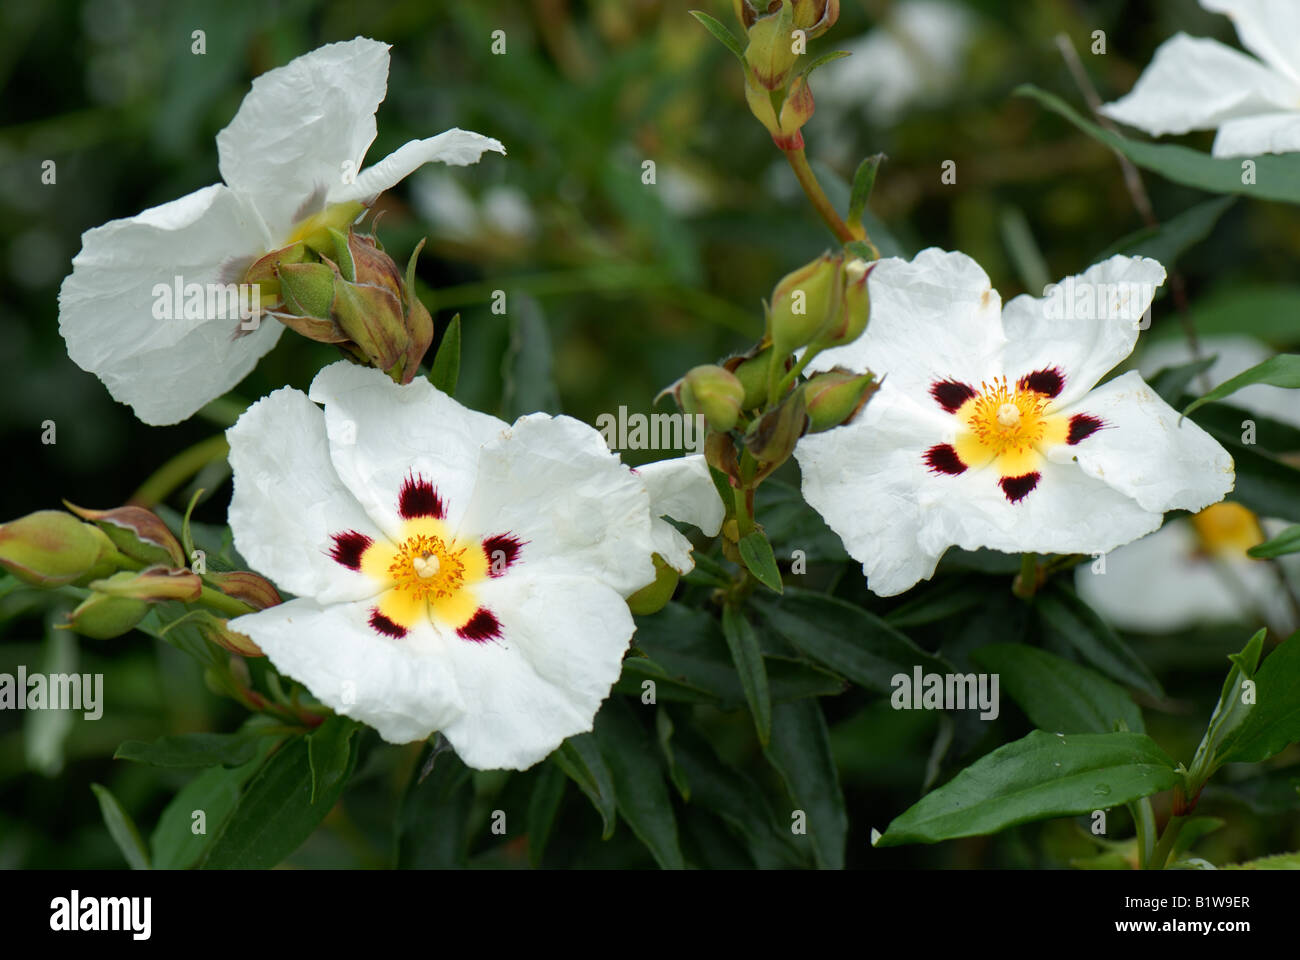 Cistus x cyprius flowers on large garden shrub Stock Photo